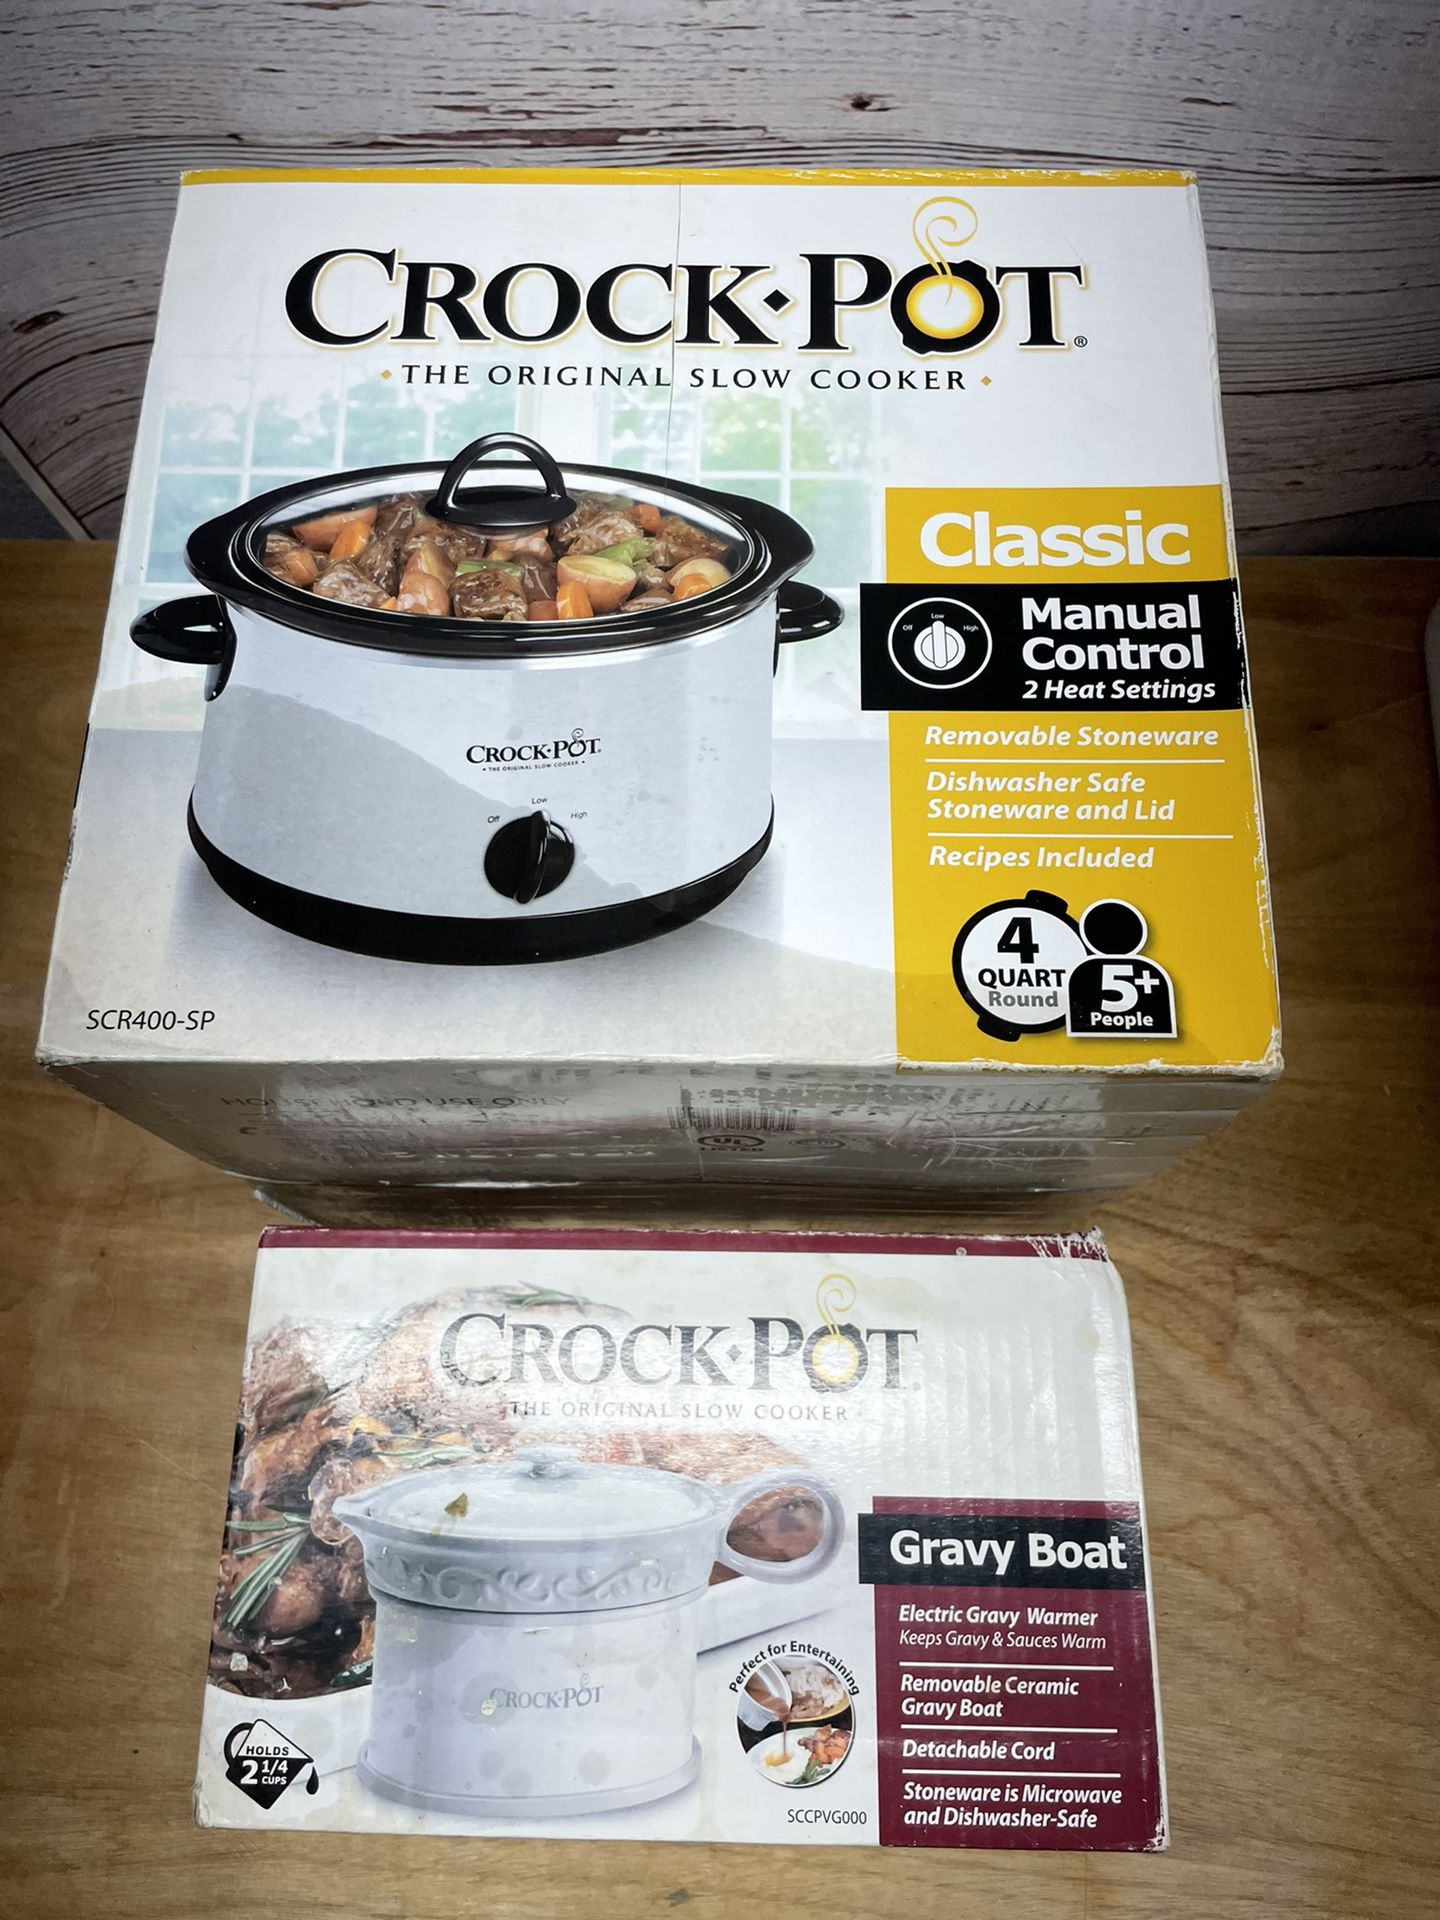 Crock Pot With Gravy Boat